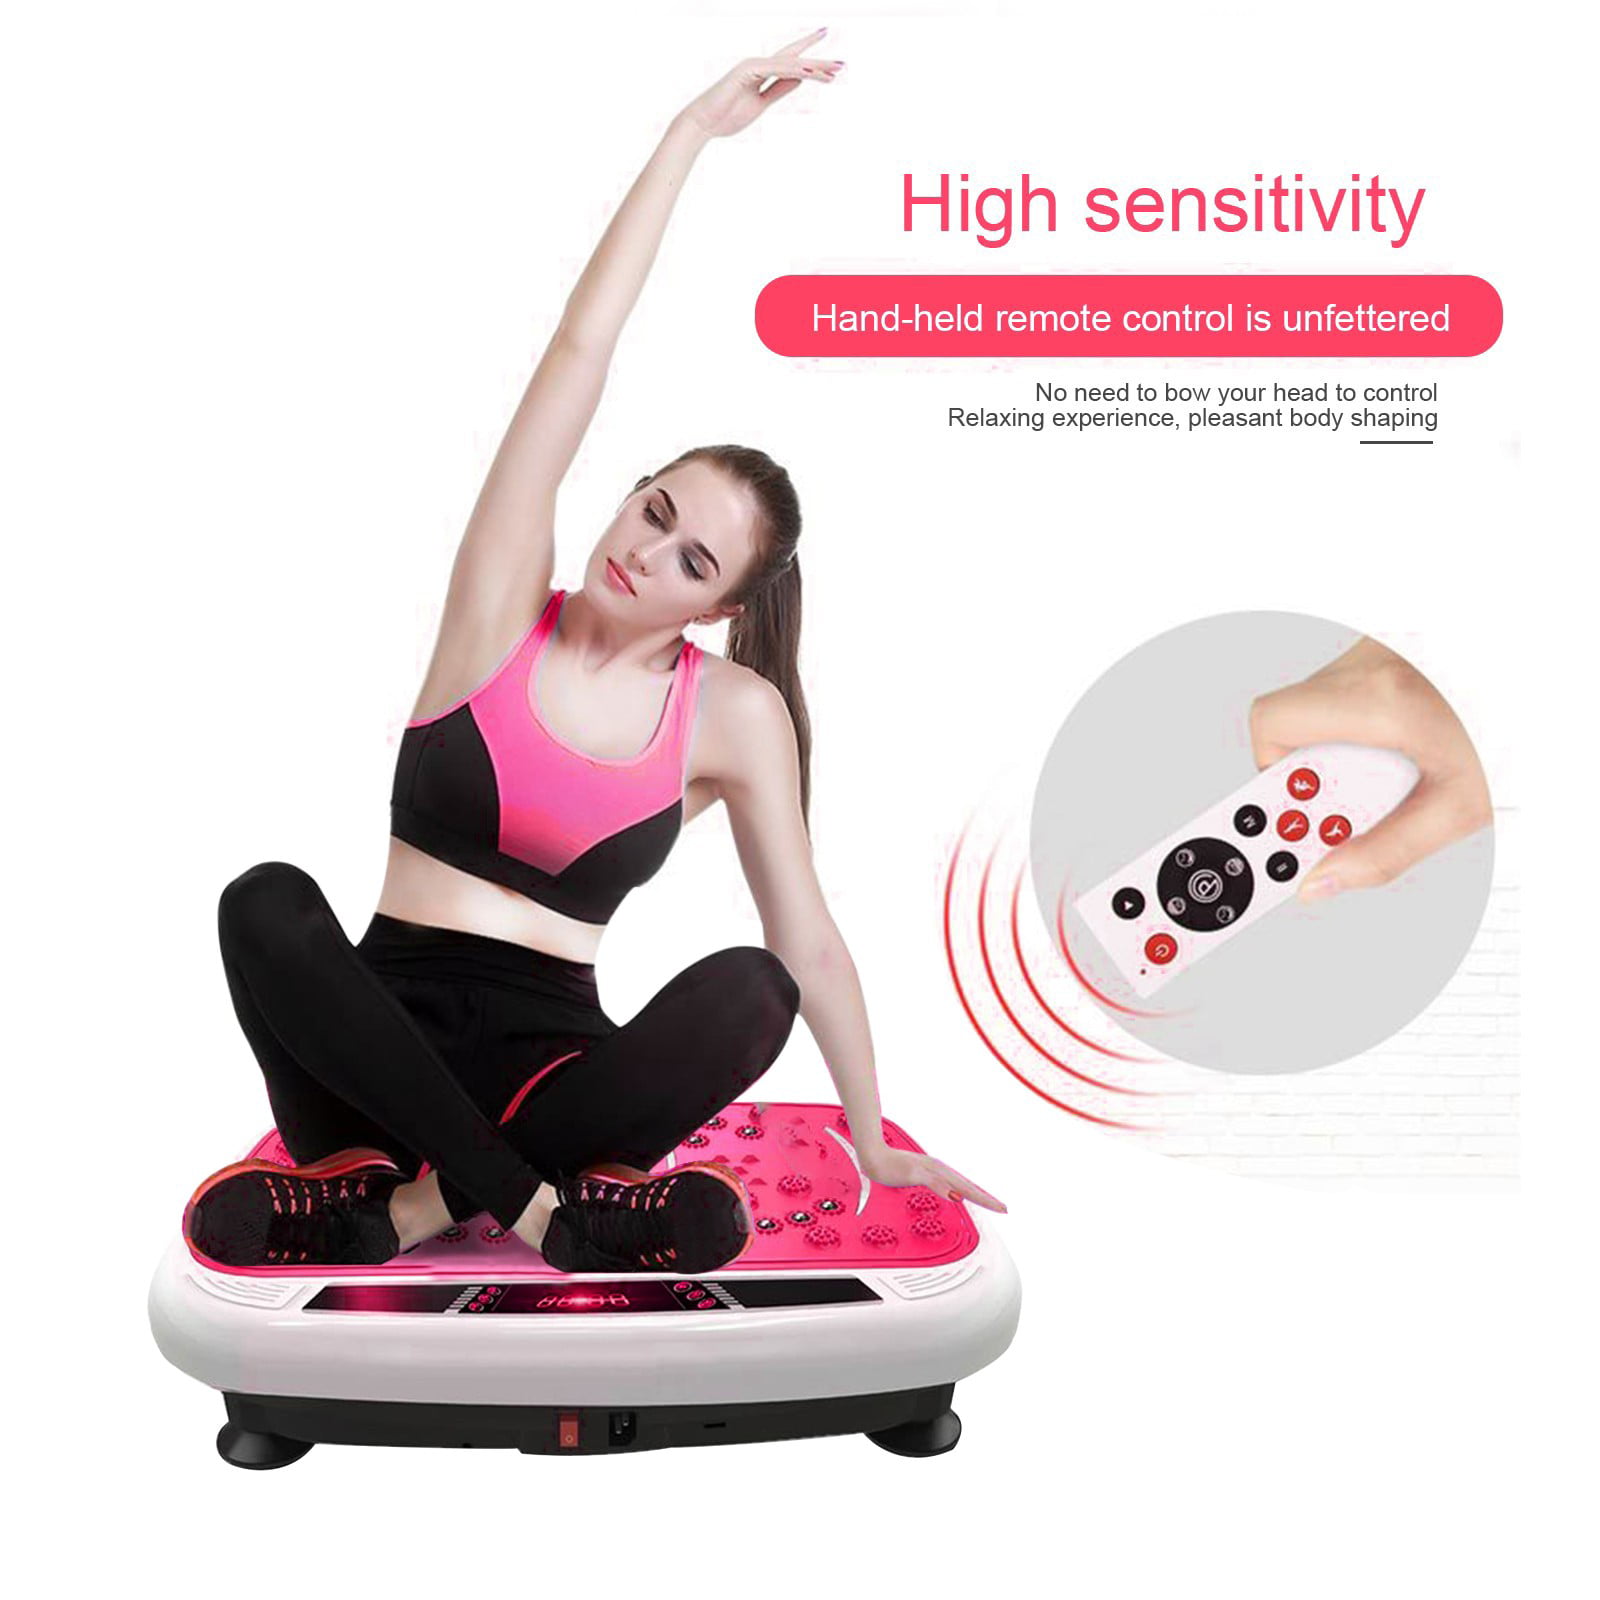 Ultrathin Body Slimmer   fitness Active Exercise Jogging Vibration Power Plate